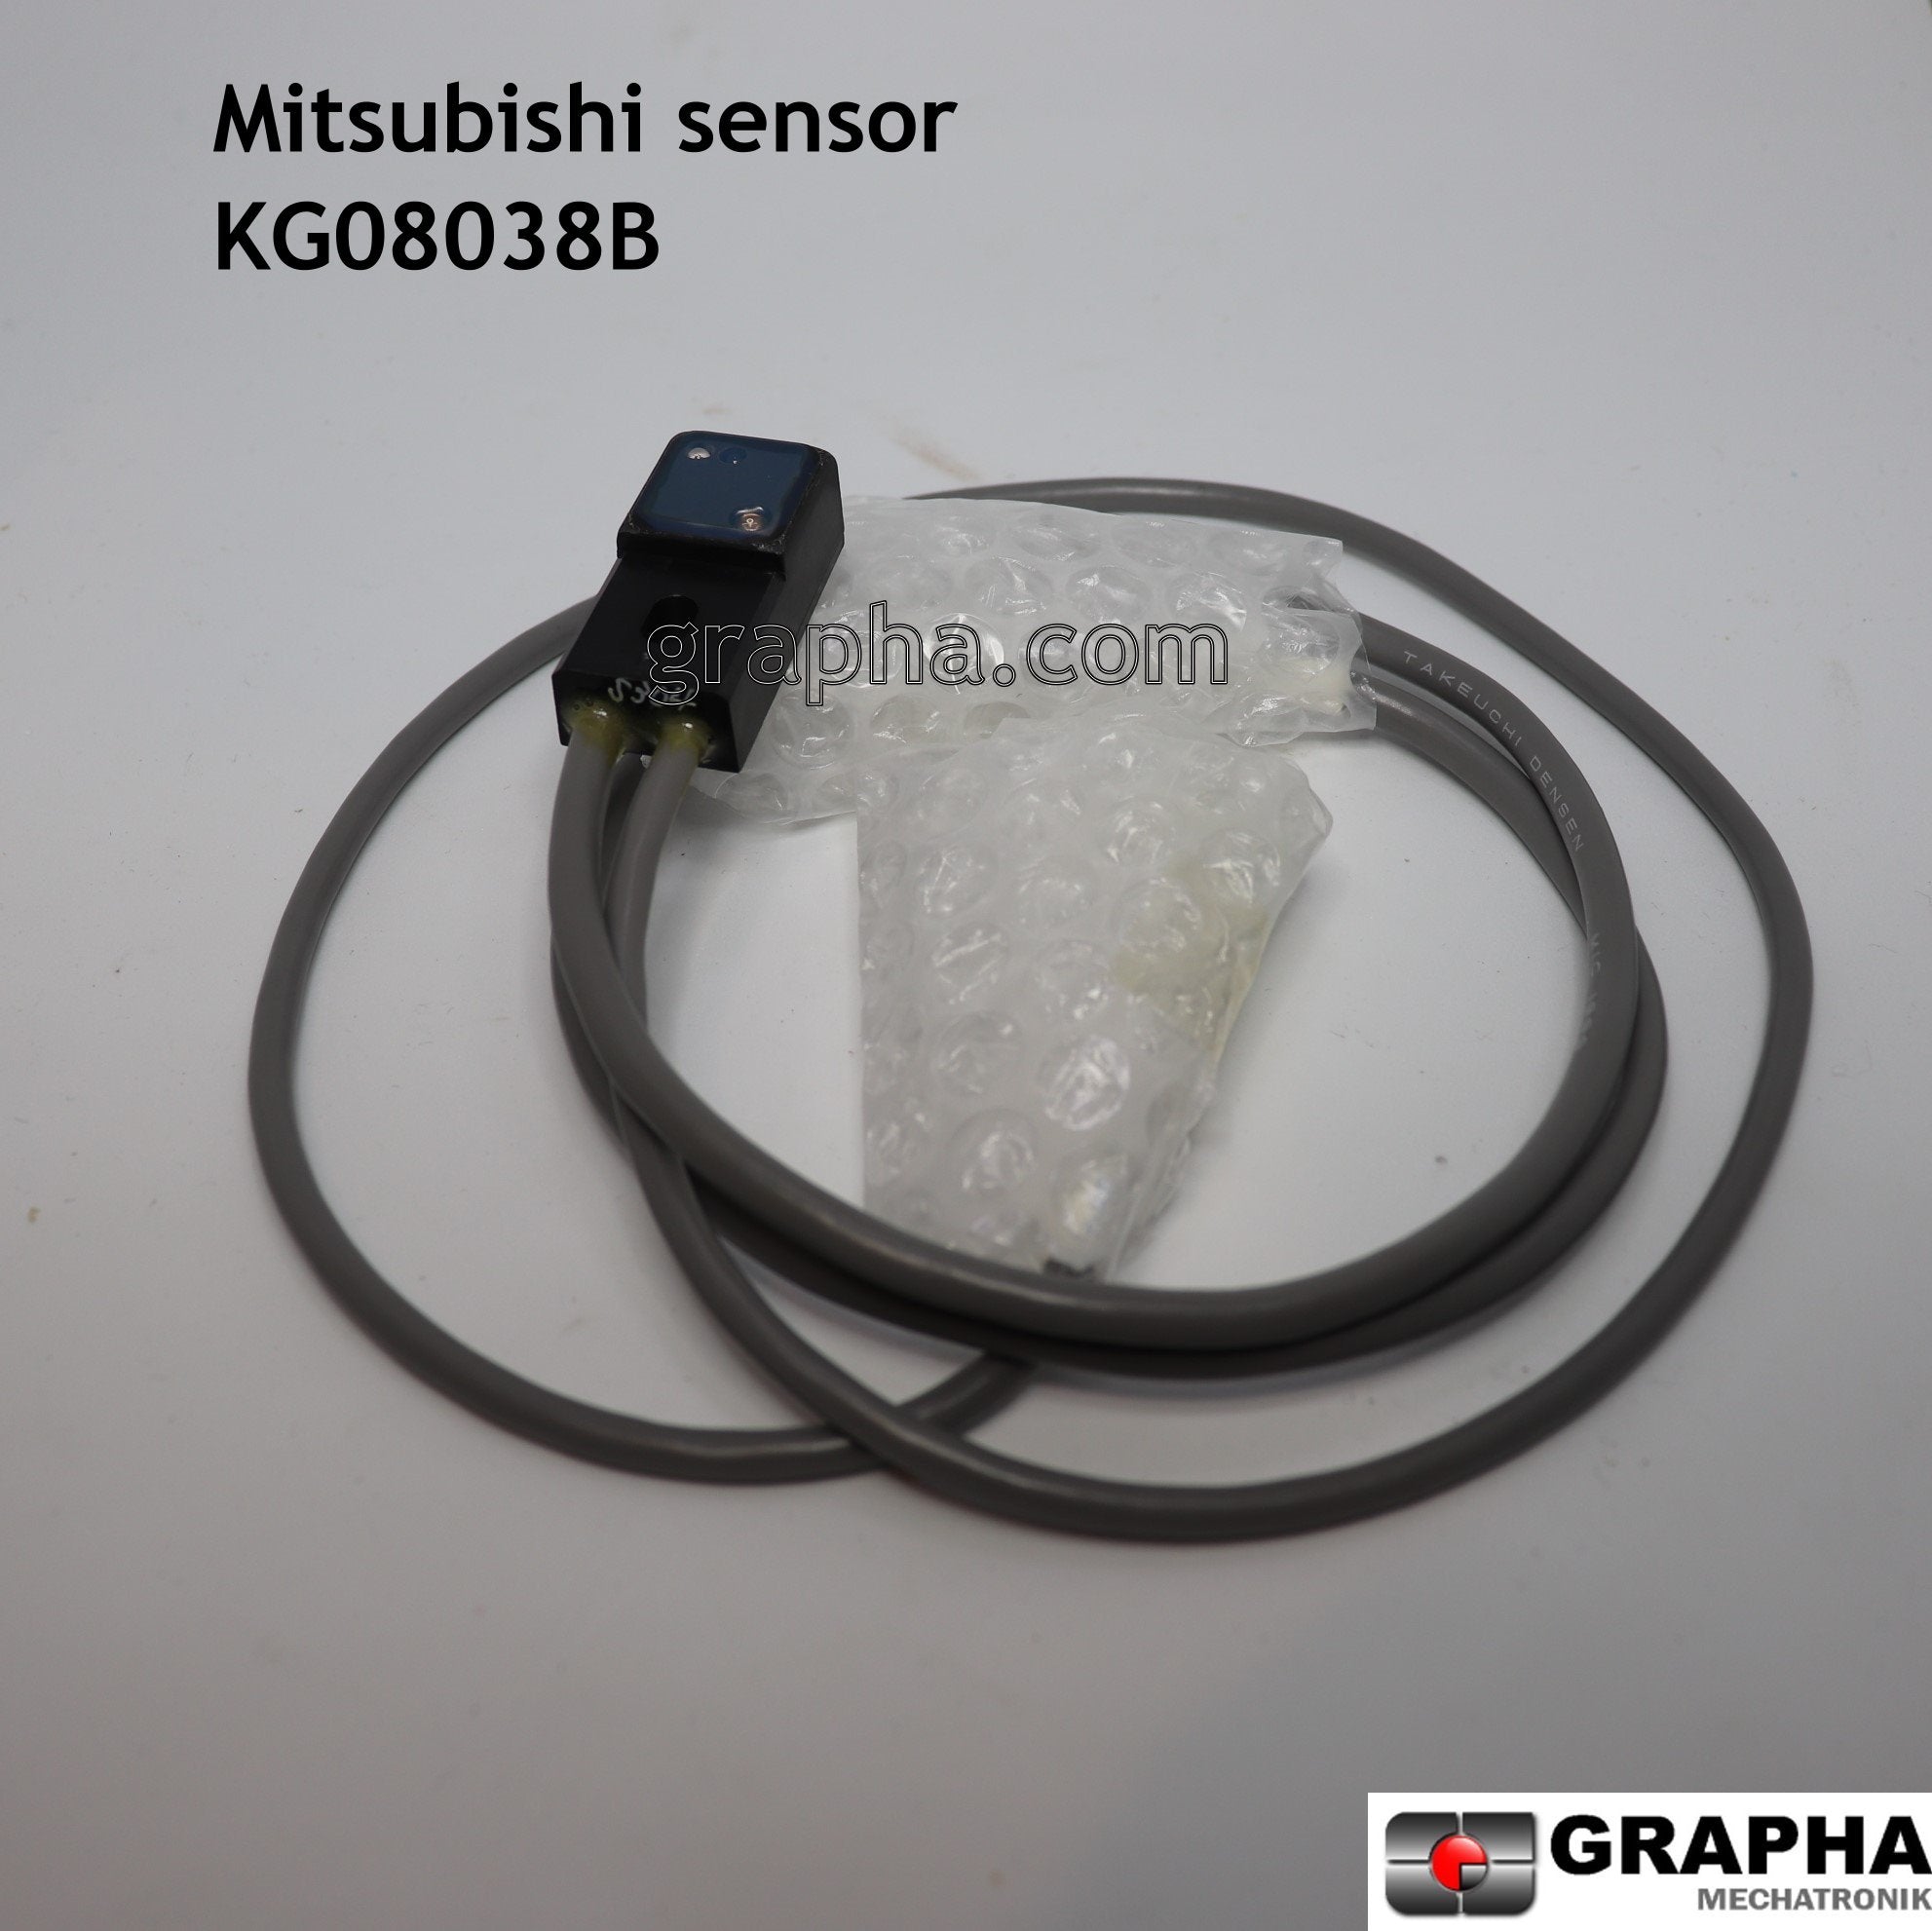 Mitsubishi sensor KG08038B